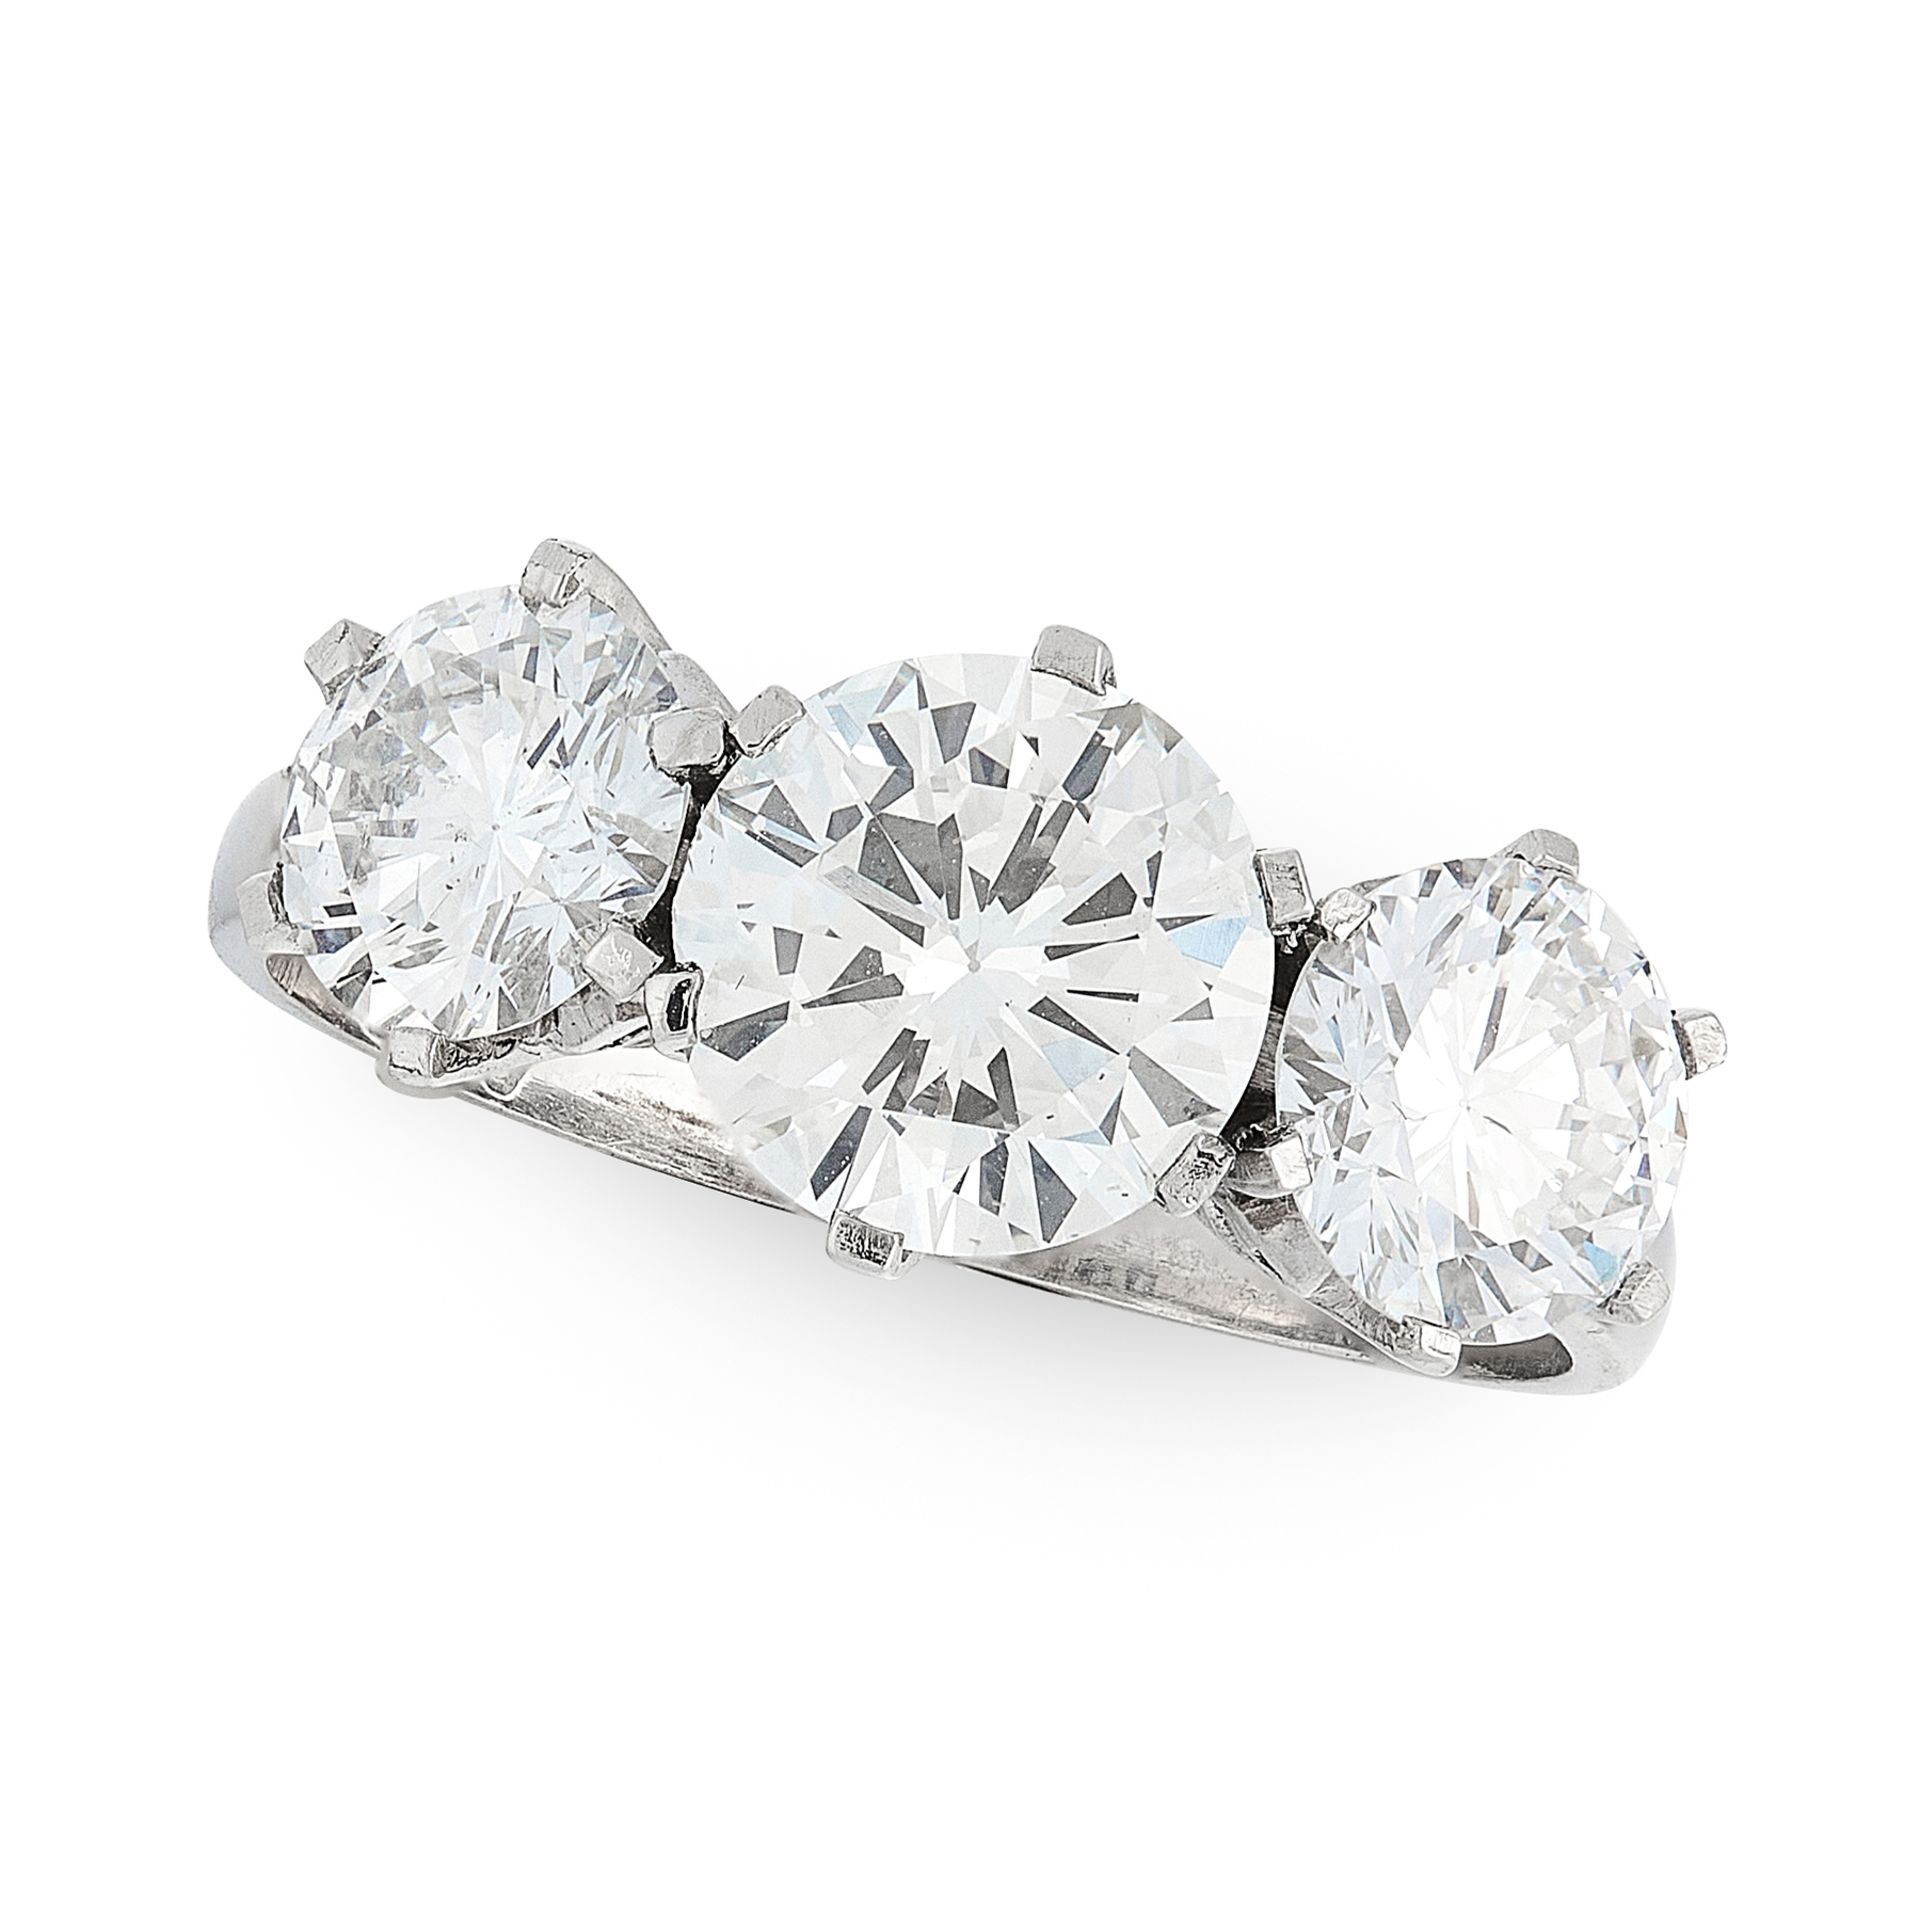 A DIAMOND THREE STONE RING in platinum, set with a principal round cut diamond of 1.40 carats